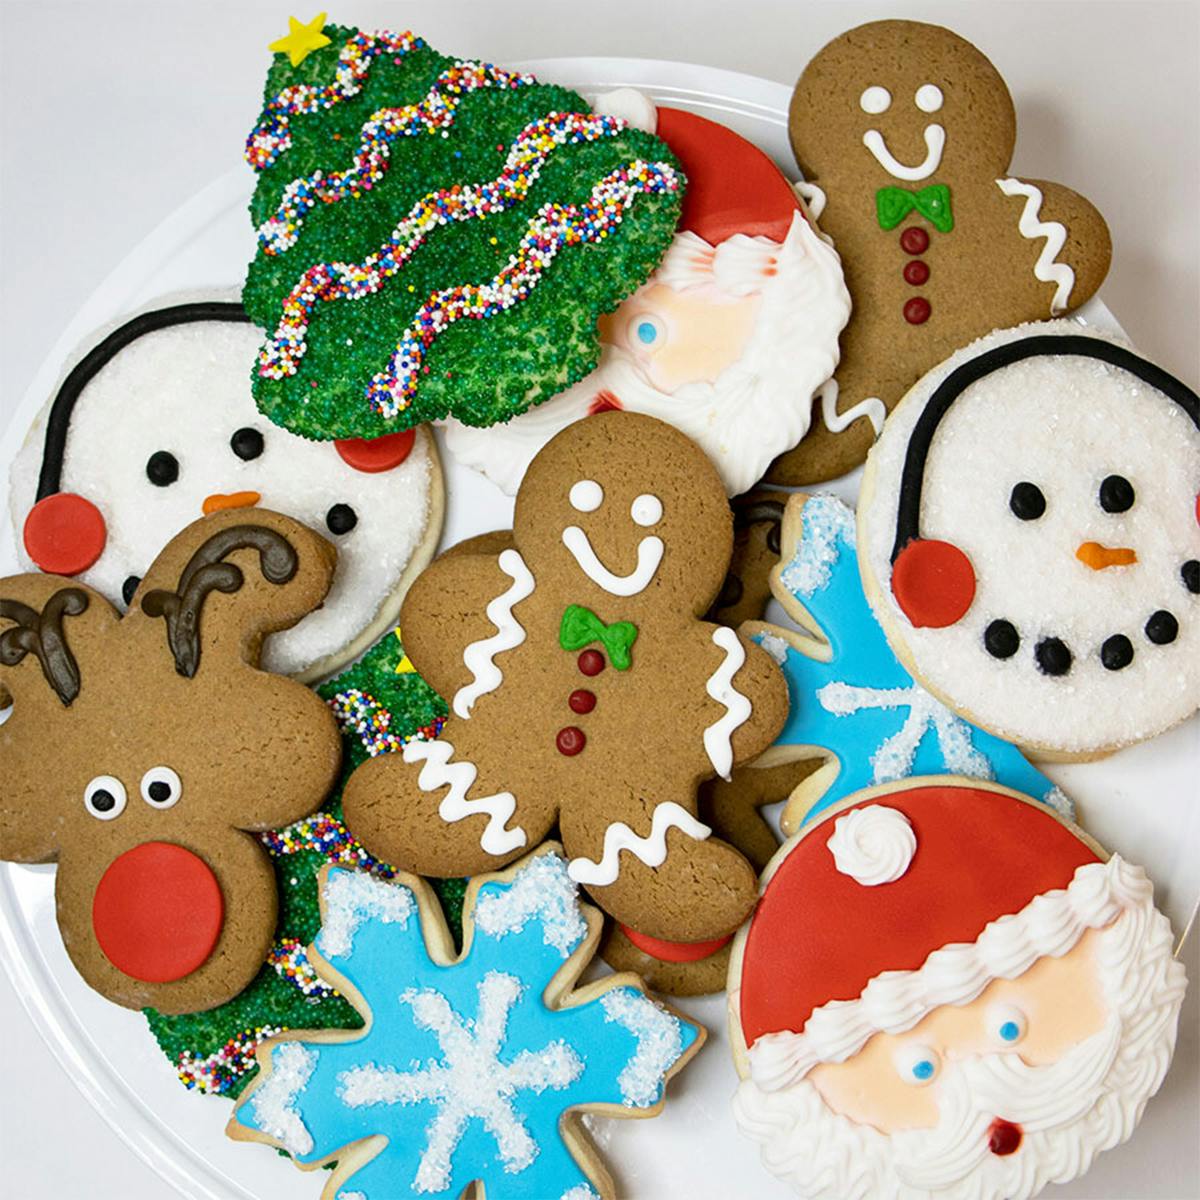 https://goldbelly.imgix.net/uploads/showcase_media_asset/image/182691/Carlos-Bakery-Christmas-Cookies-1.jpg?ixlib=rails-3.0.2